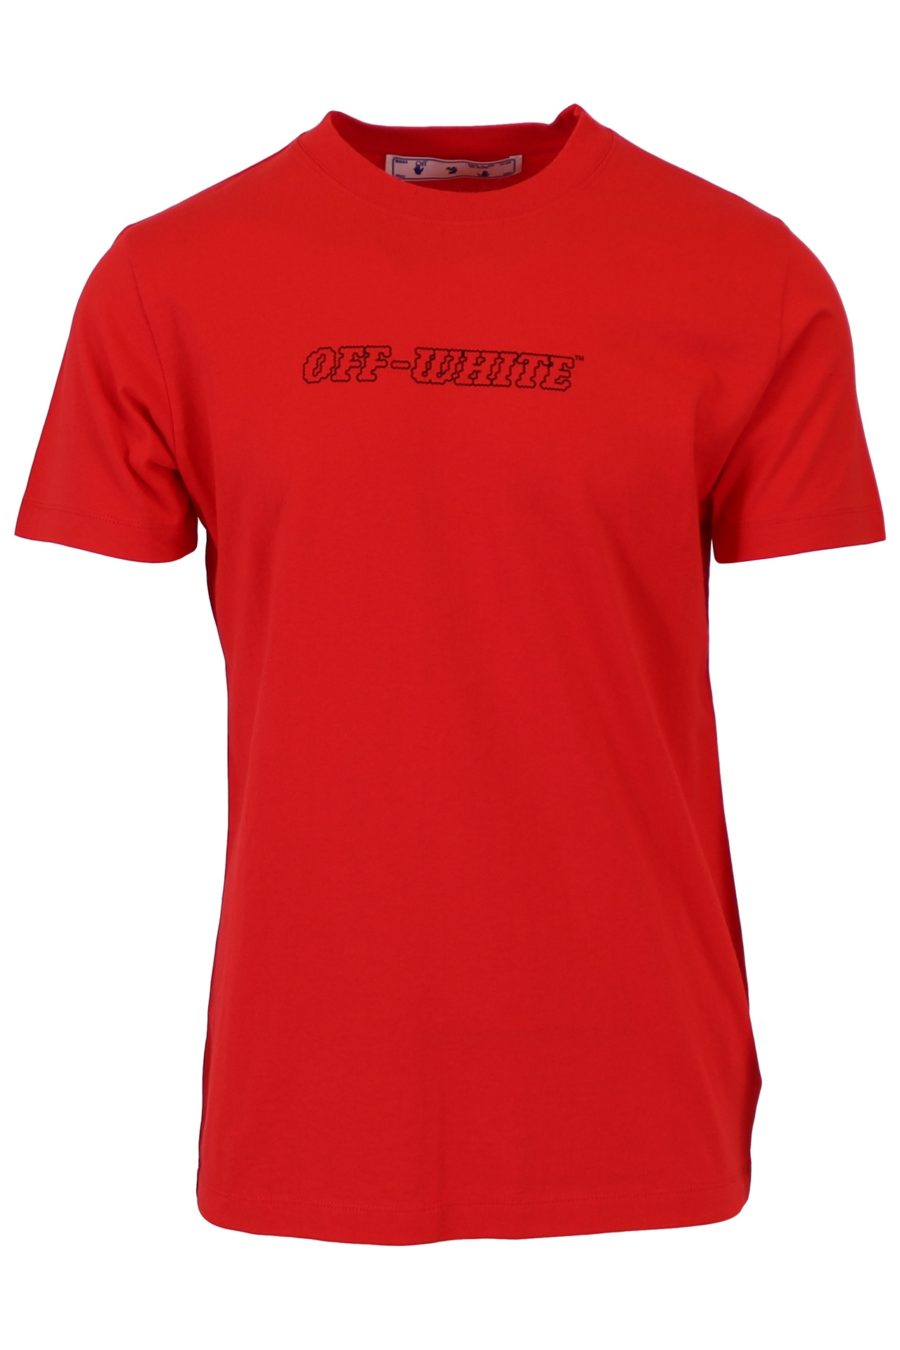 Camiseta Off-White roja con estampado gráfico - 6b67453c660aa1408dcf8fa9b04d306e4c74108b